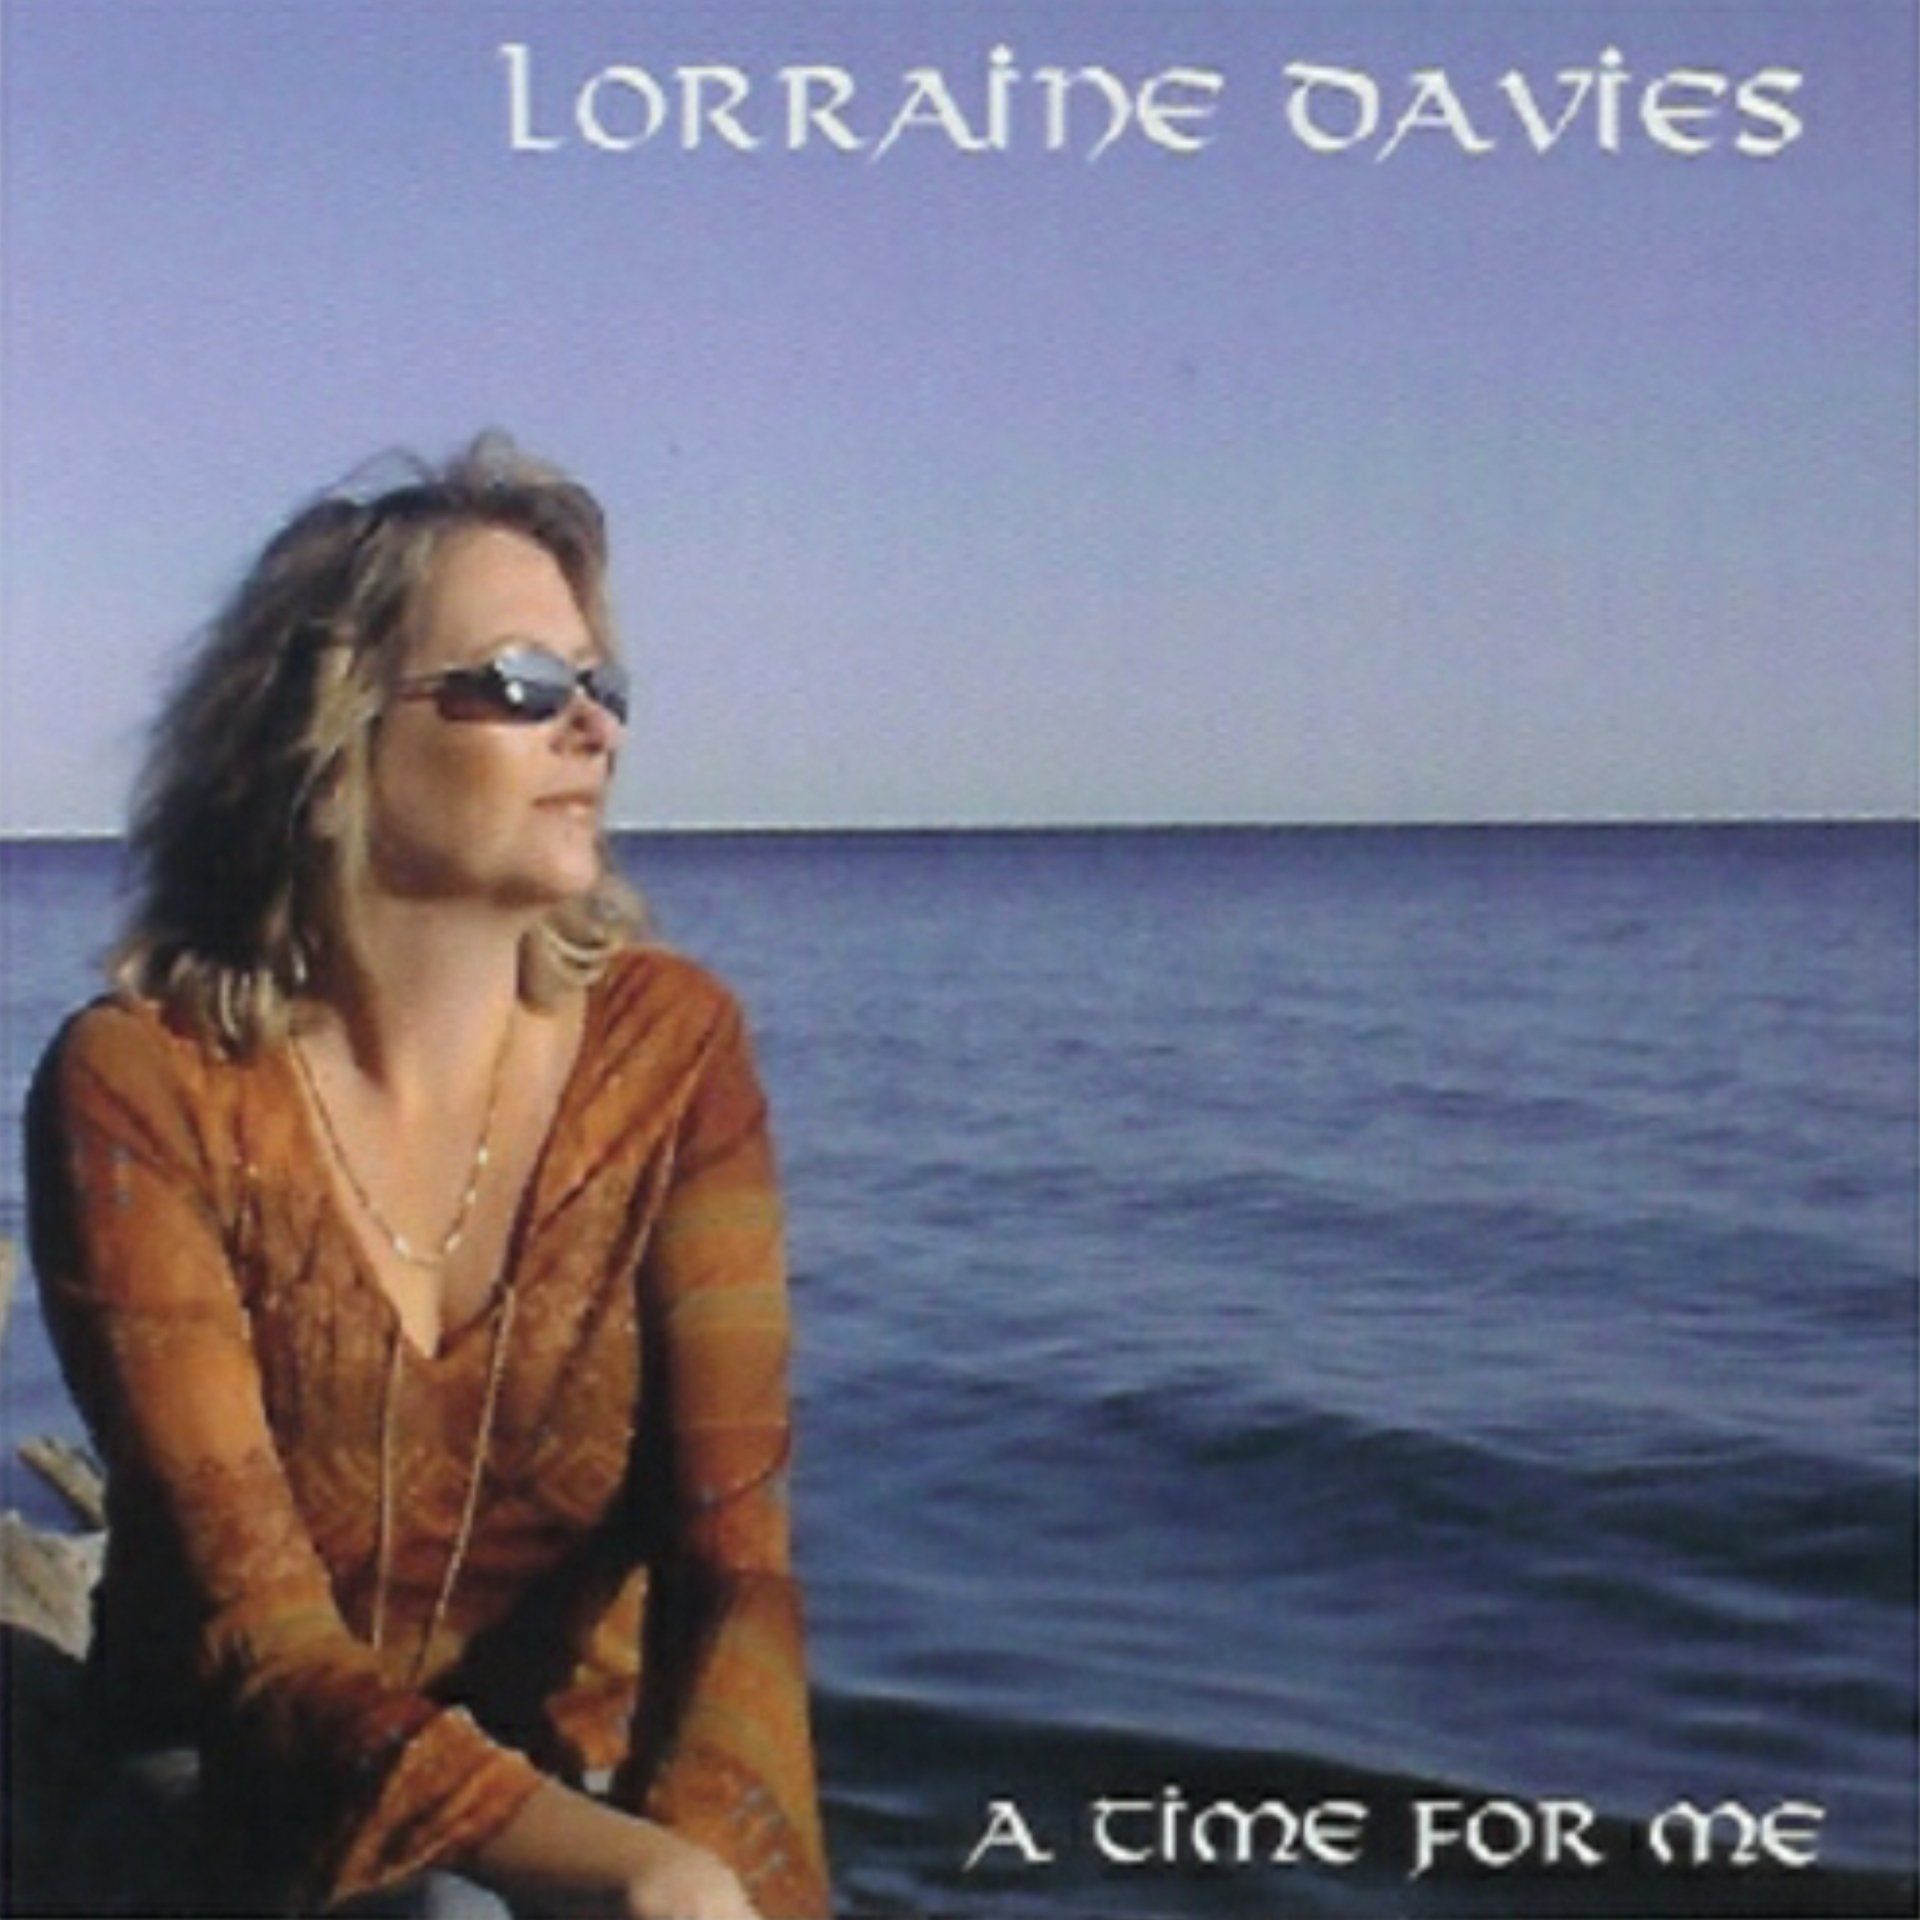 Singer and Songwriter Lorraine Davies